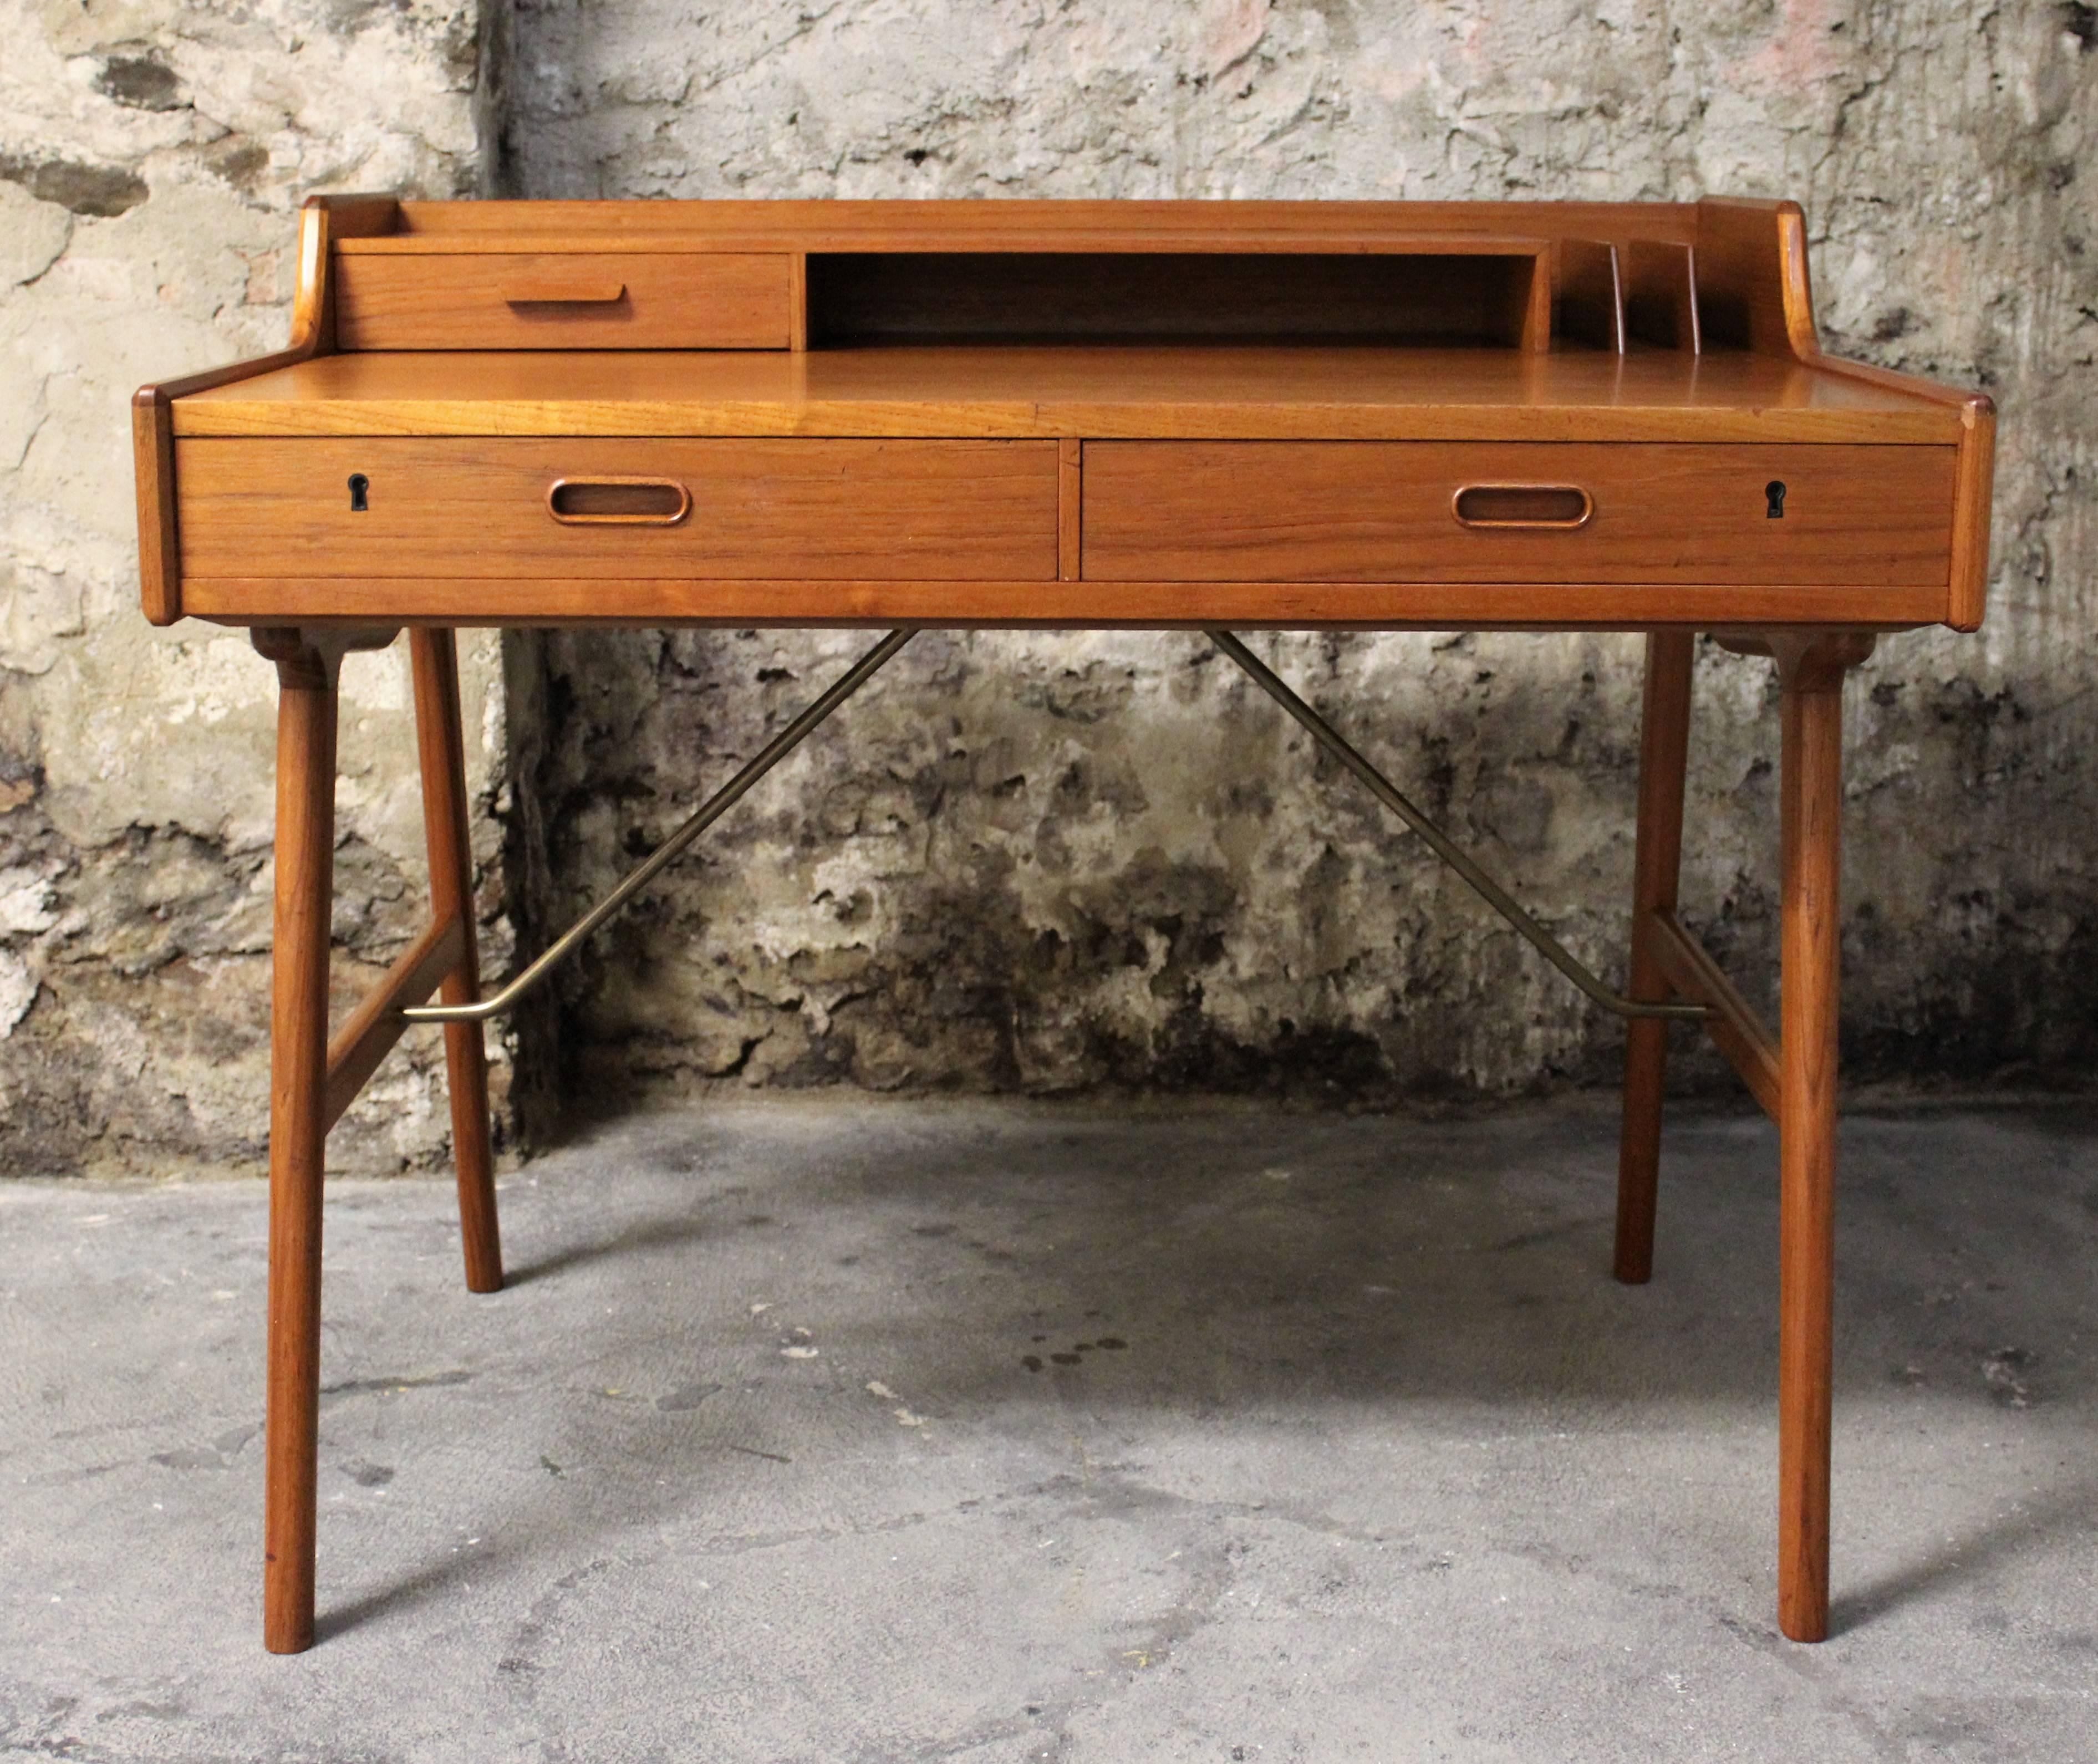 This model no. 56 solid teak desk with splayed legs, tabletop with drawer and storage shelf was designed by Arne Wahl Iversen for Vinde Møbelfabrik in Denmark.

Scandinavian Modern / Mid-Century Modern.